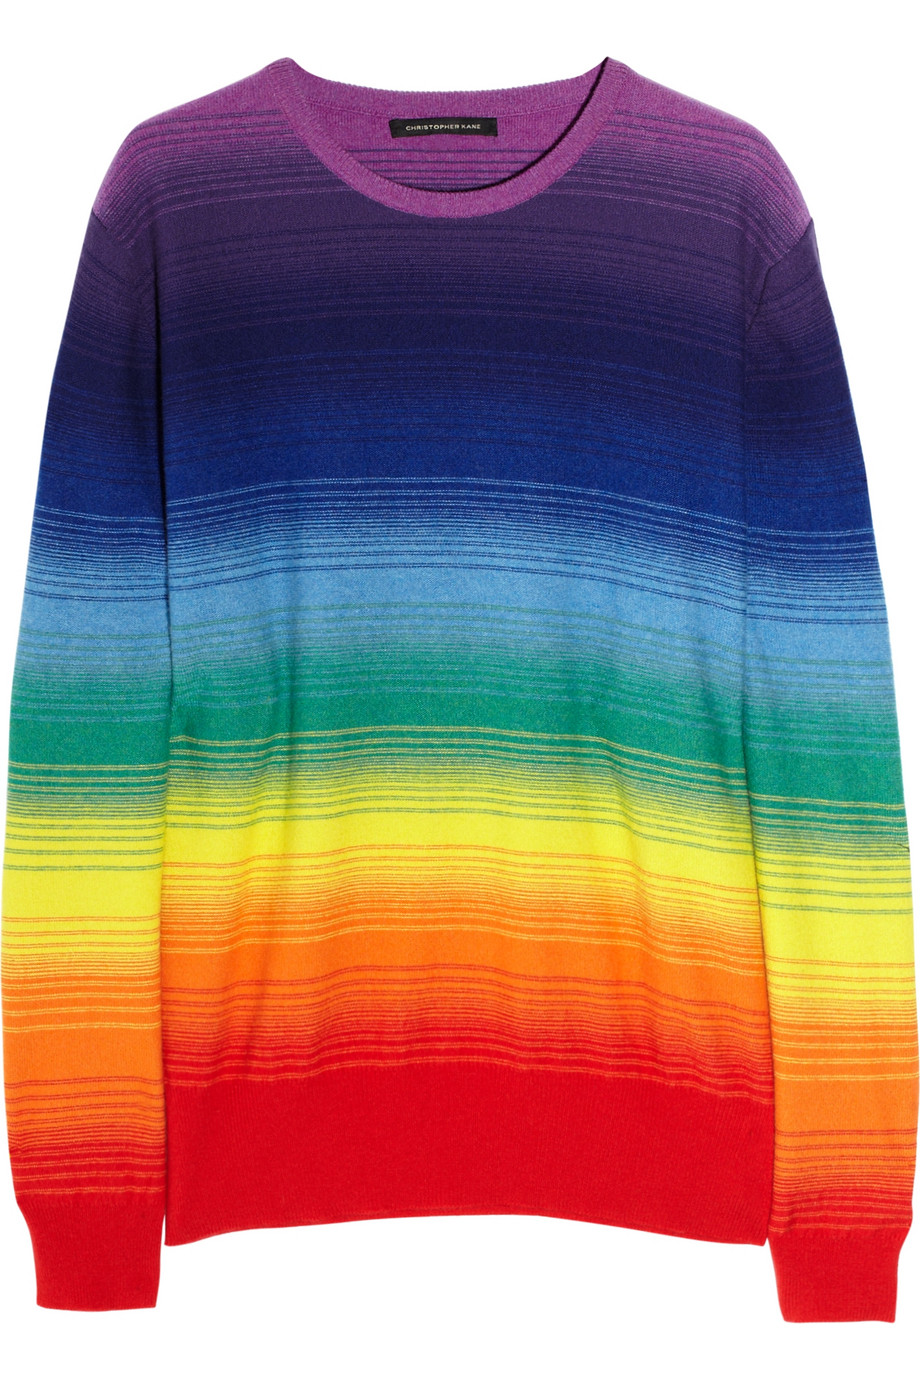 Christopher kane Rainbow Cashmere Sweater | Lyst